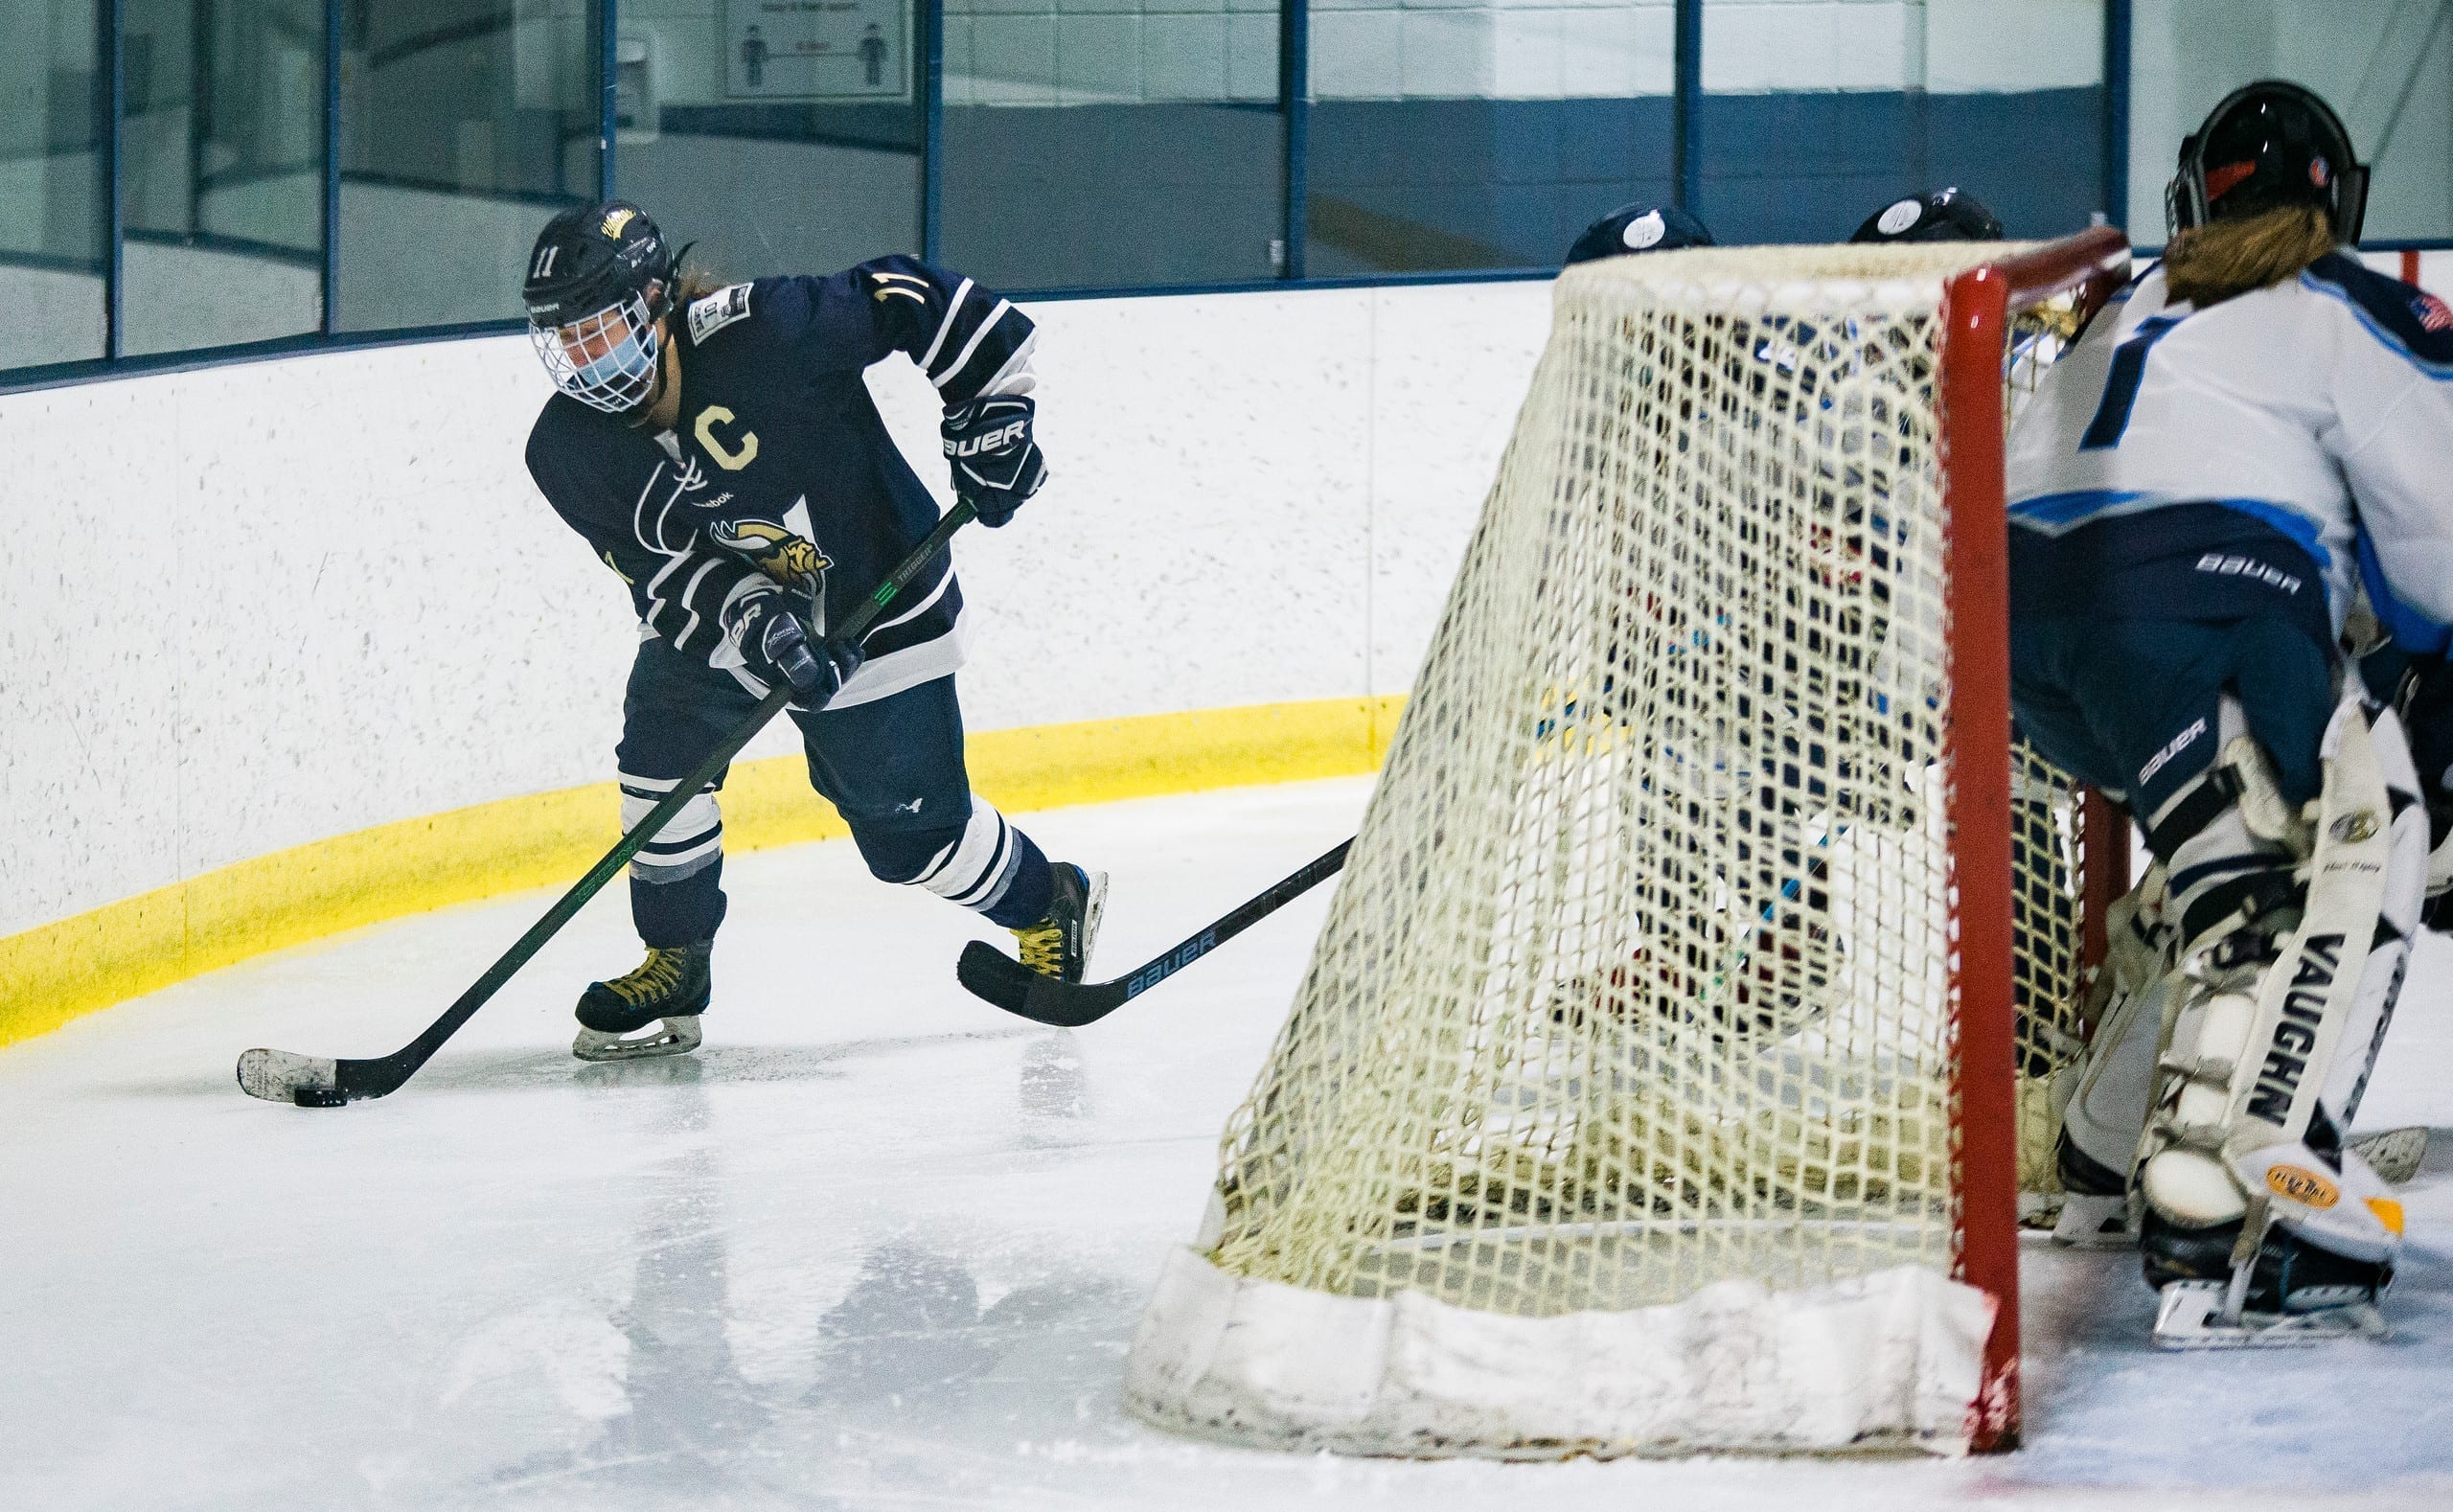 School Sports Roundup: Winthrop girls hockey tops Medford - Itemlive : Itemlive